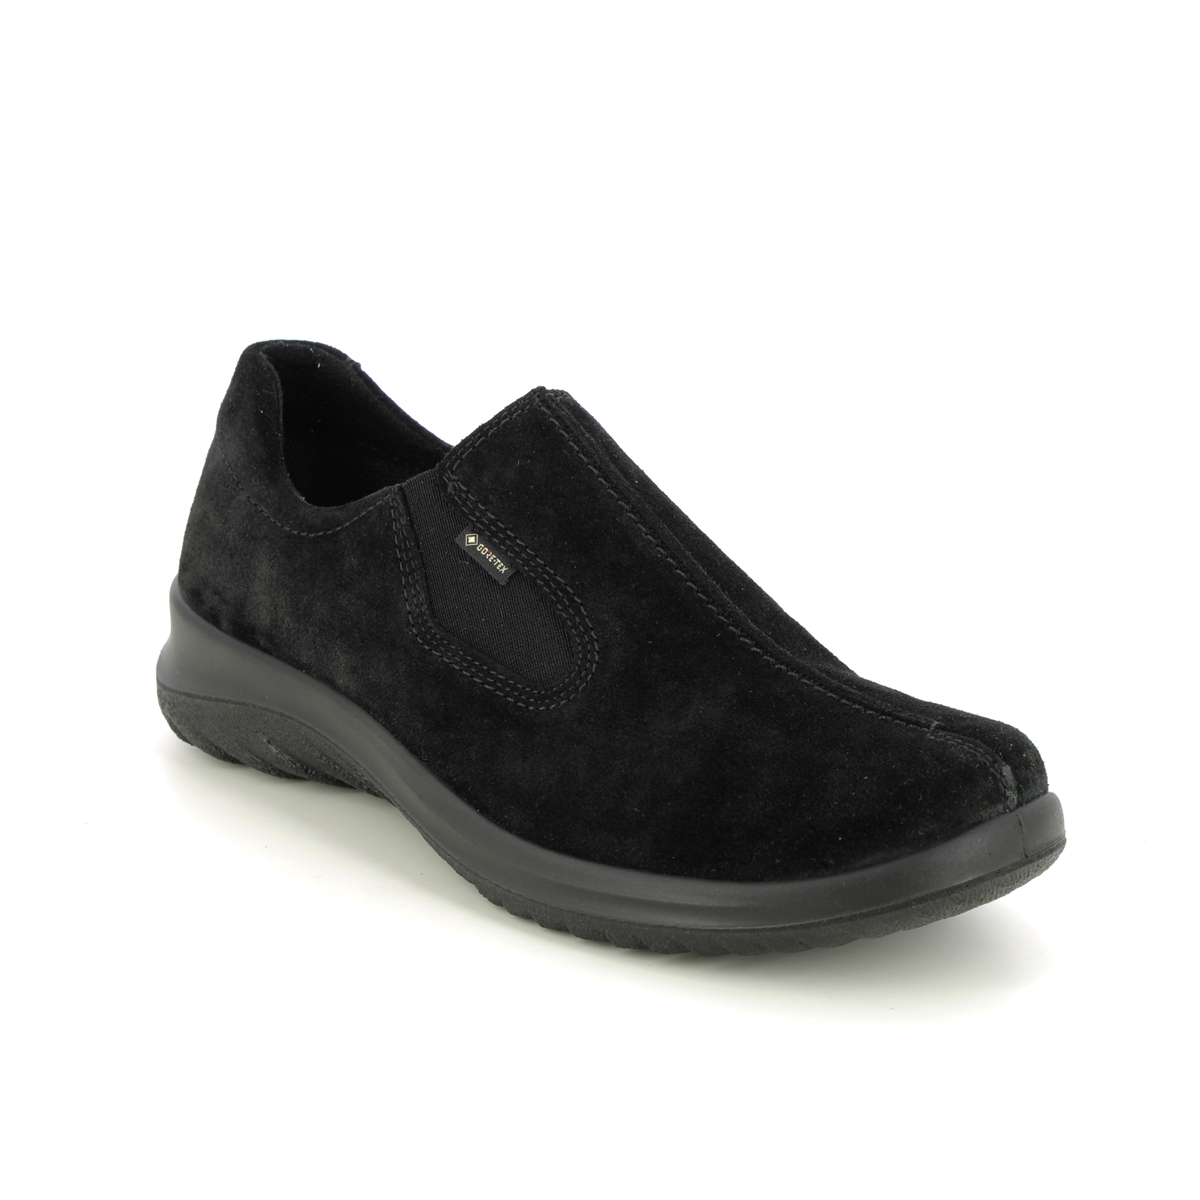 Legero Soft Shoe Gtx Black Suede Womens Comfort Slip On Shoes 2009568-0000 In Size 7.5 In Plain Black Suede